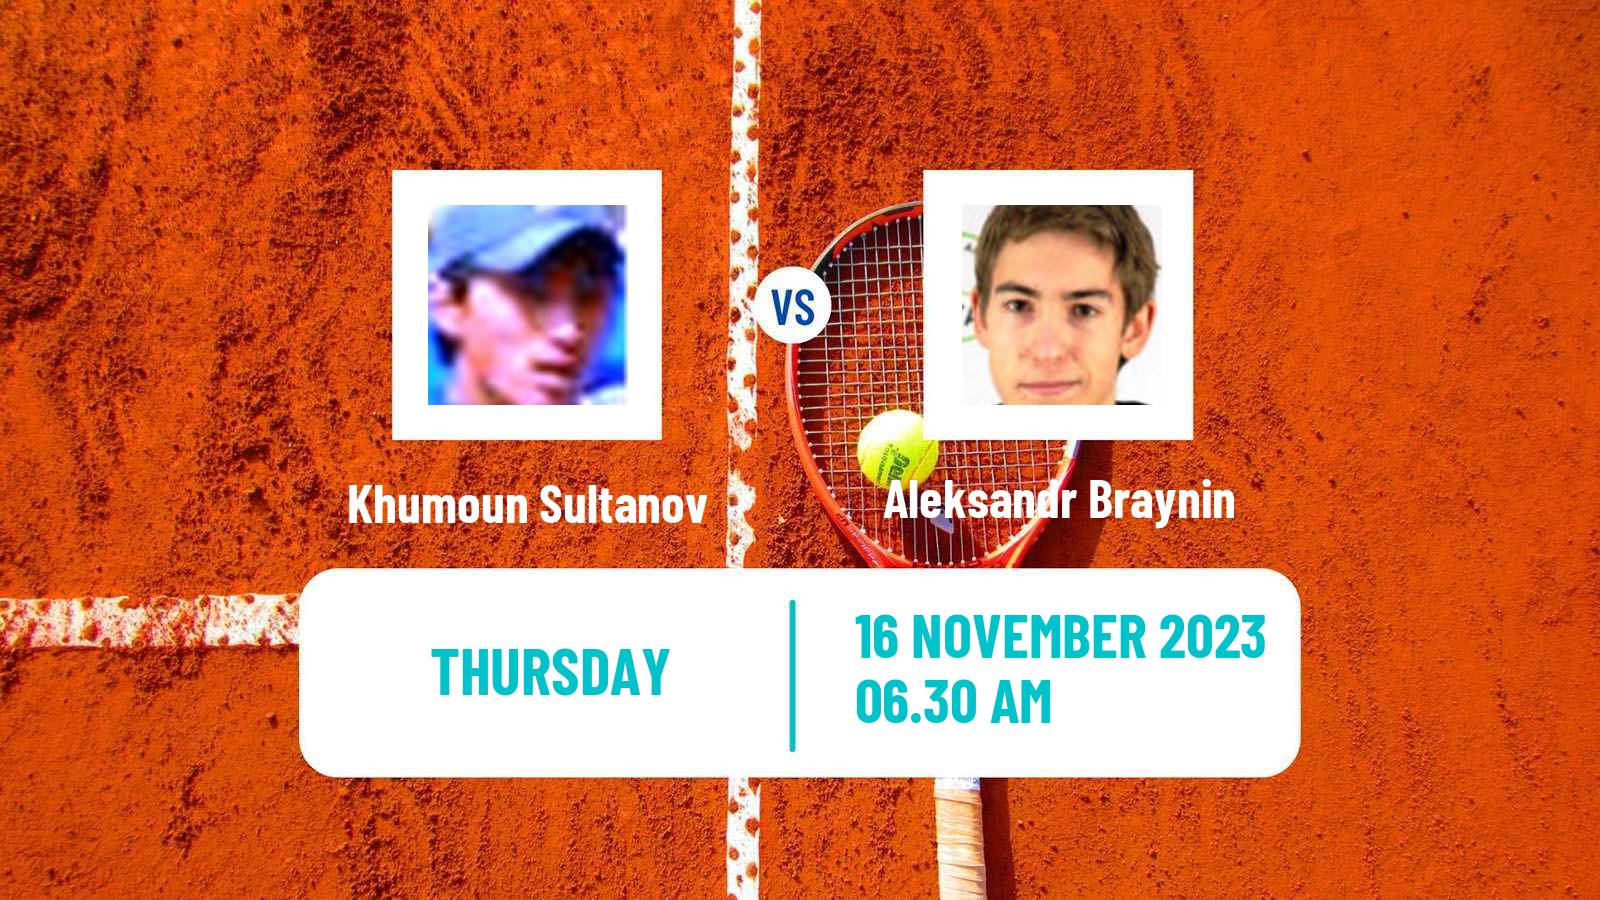 Tennis ITF M25 Vale Do Lobo Men Khumoun Sultanov - Aleksandr Braynin